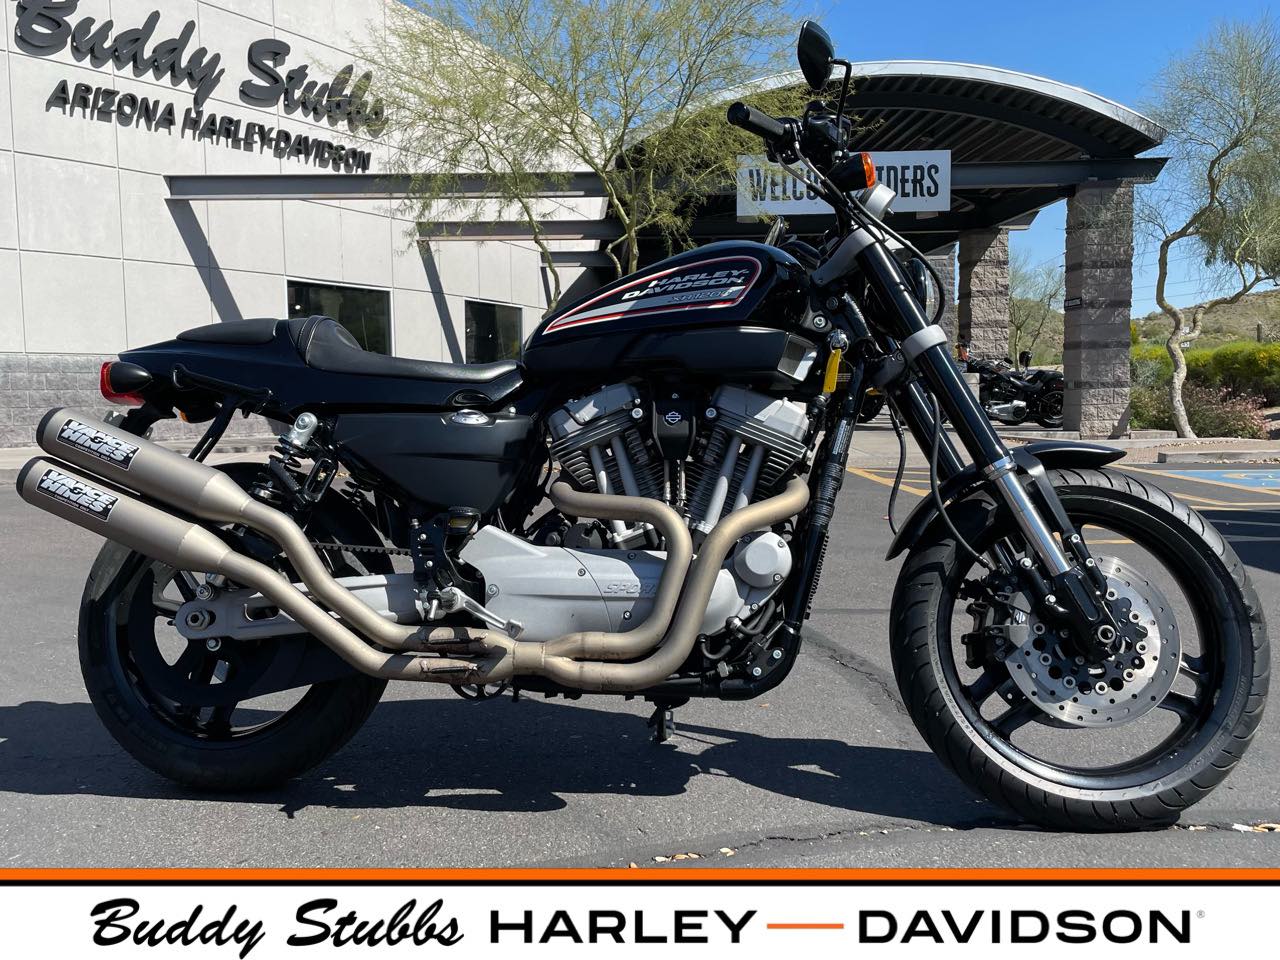 2010 Harley-Davidson Sportster XR1200 at Buddy Stubbs Arizona Harley-Davidson